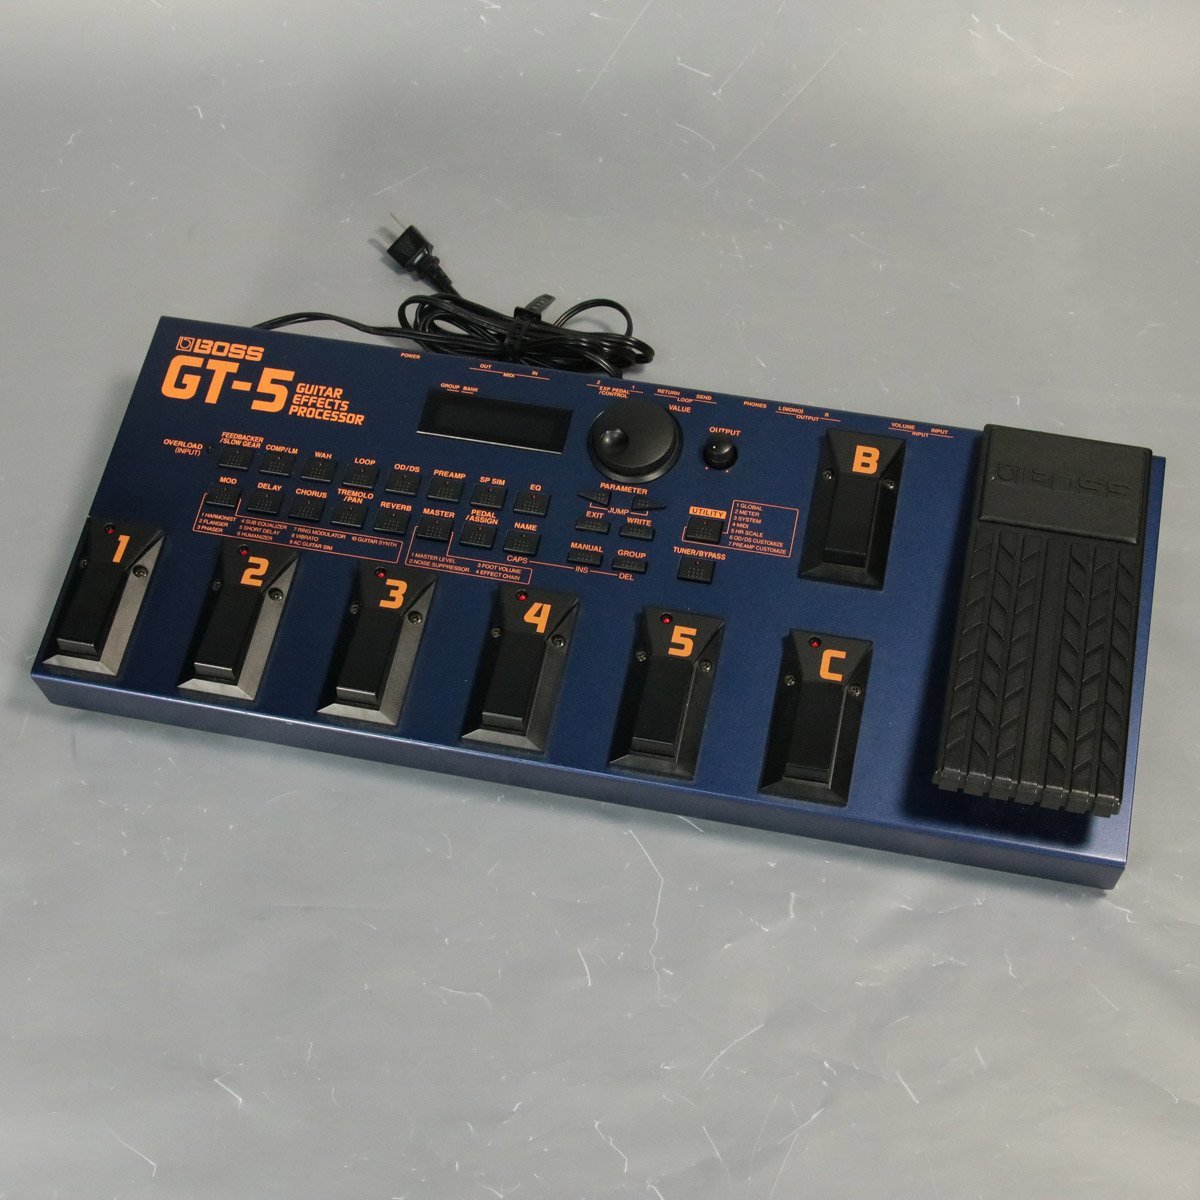 BOSS GT-5 Guitar Effects Processor マルチエフェクター フロアタイプ 